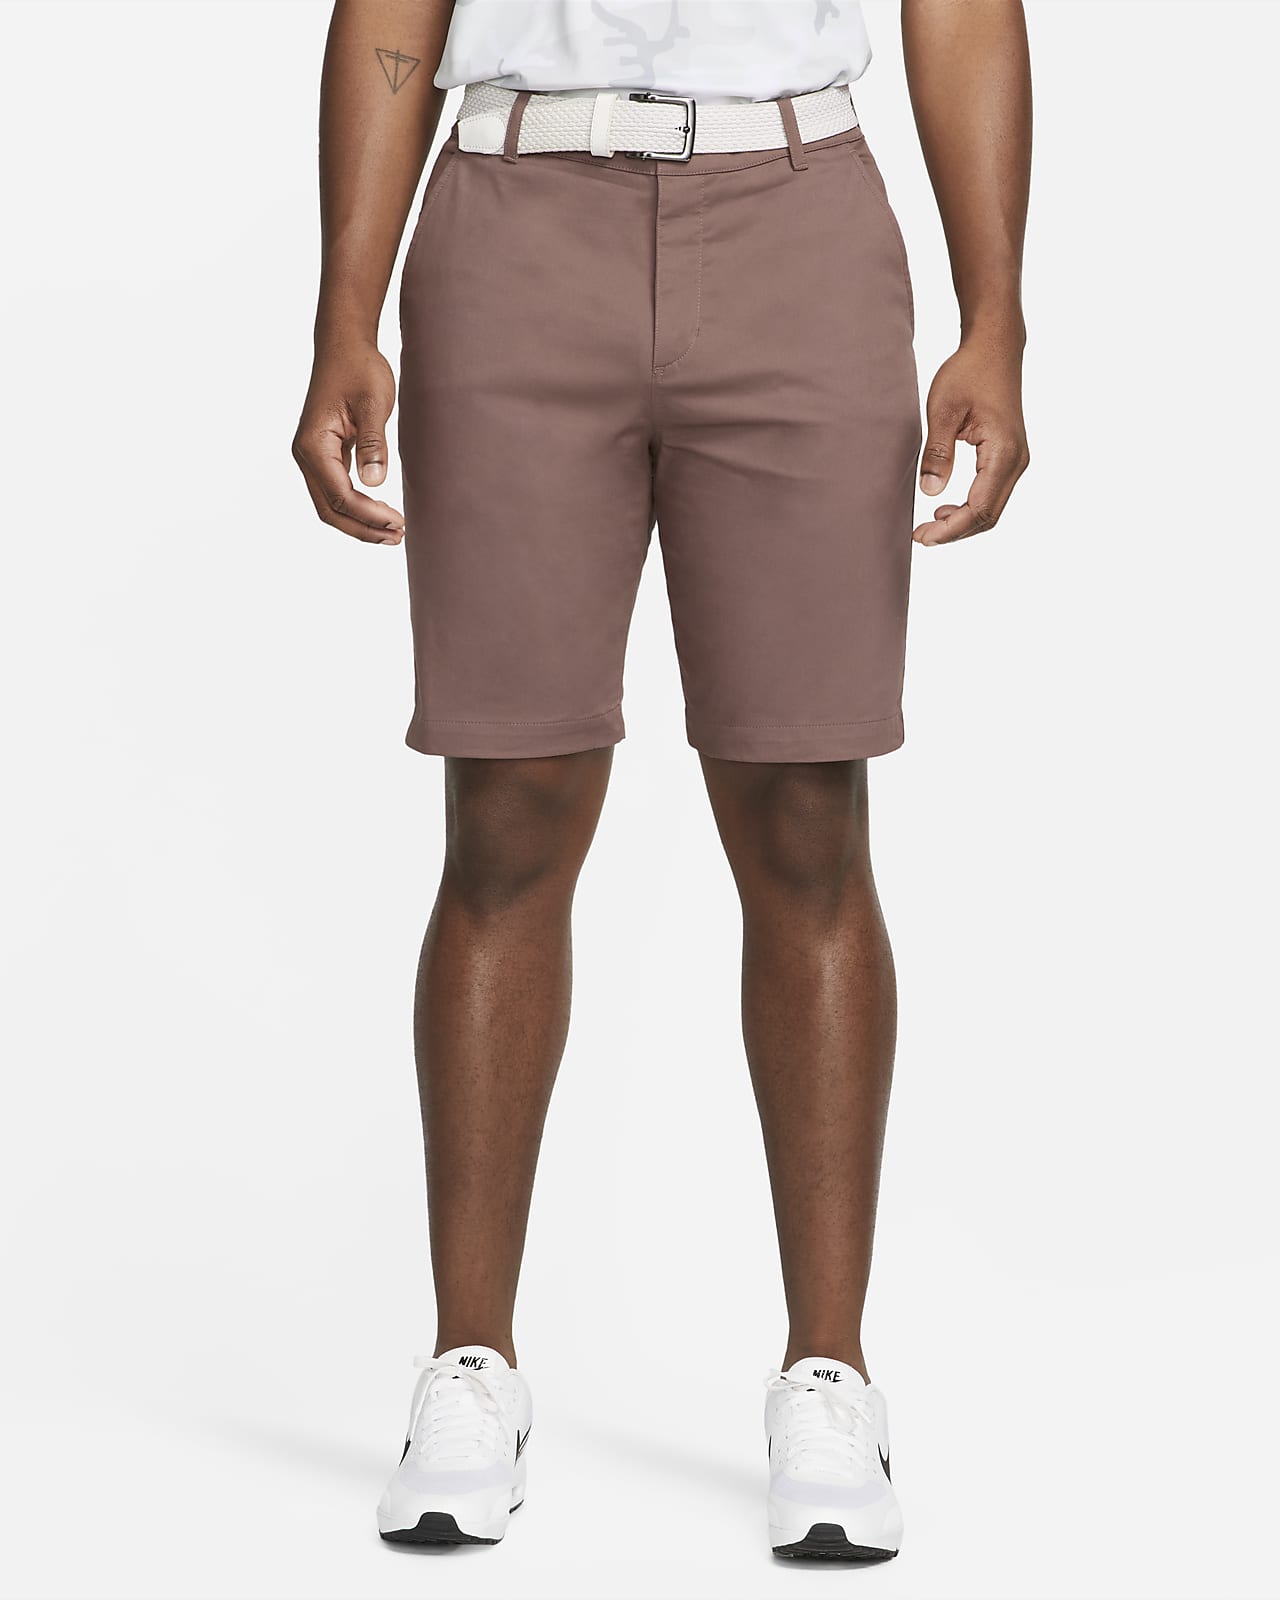 Nike Dri-FIT UV Men's 10.5 Golf Chino Shorts.